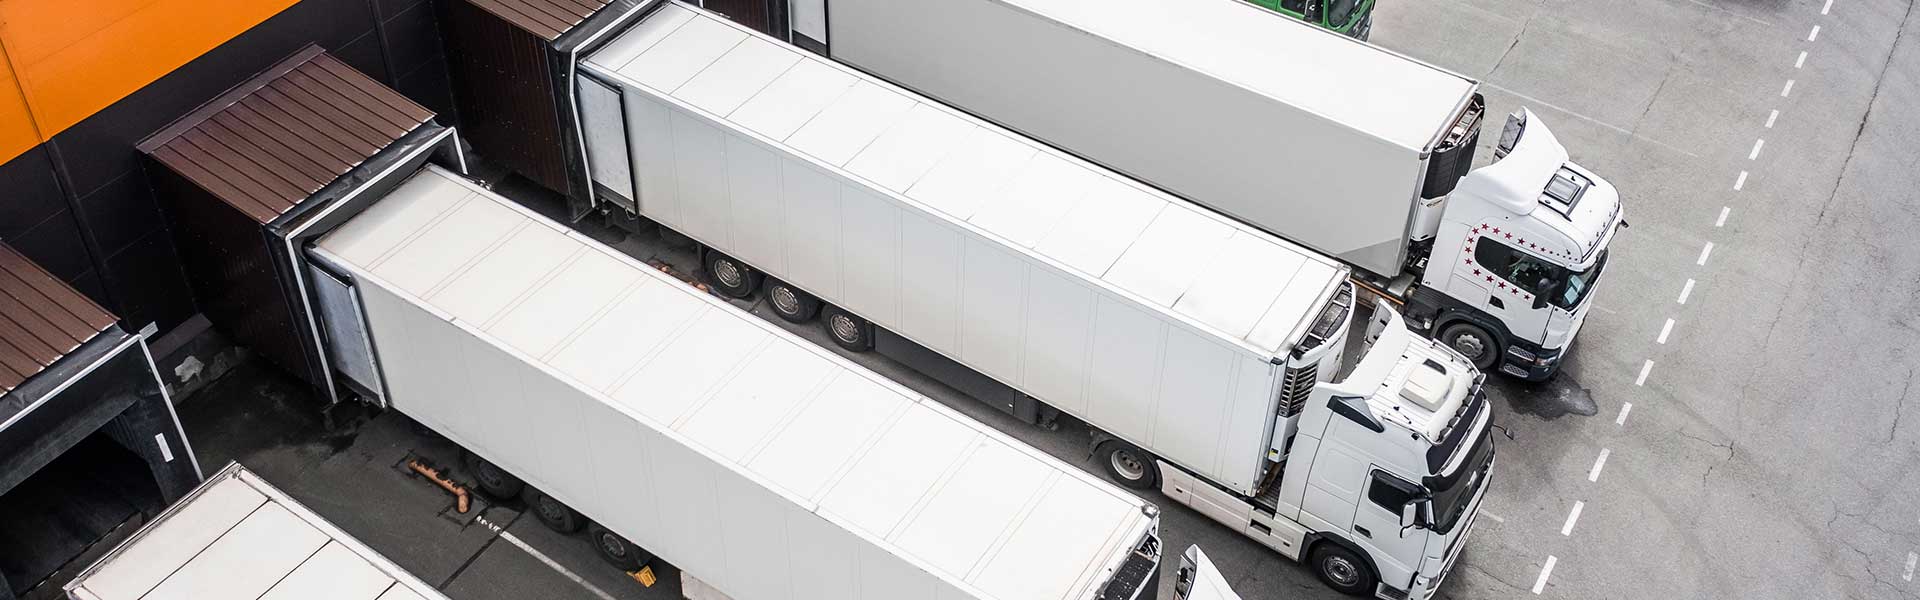 ELEGANT Logistics - Refrigerated Freight